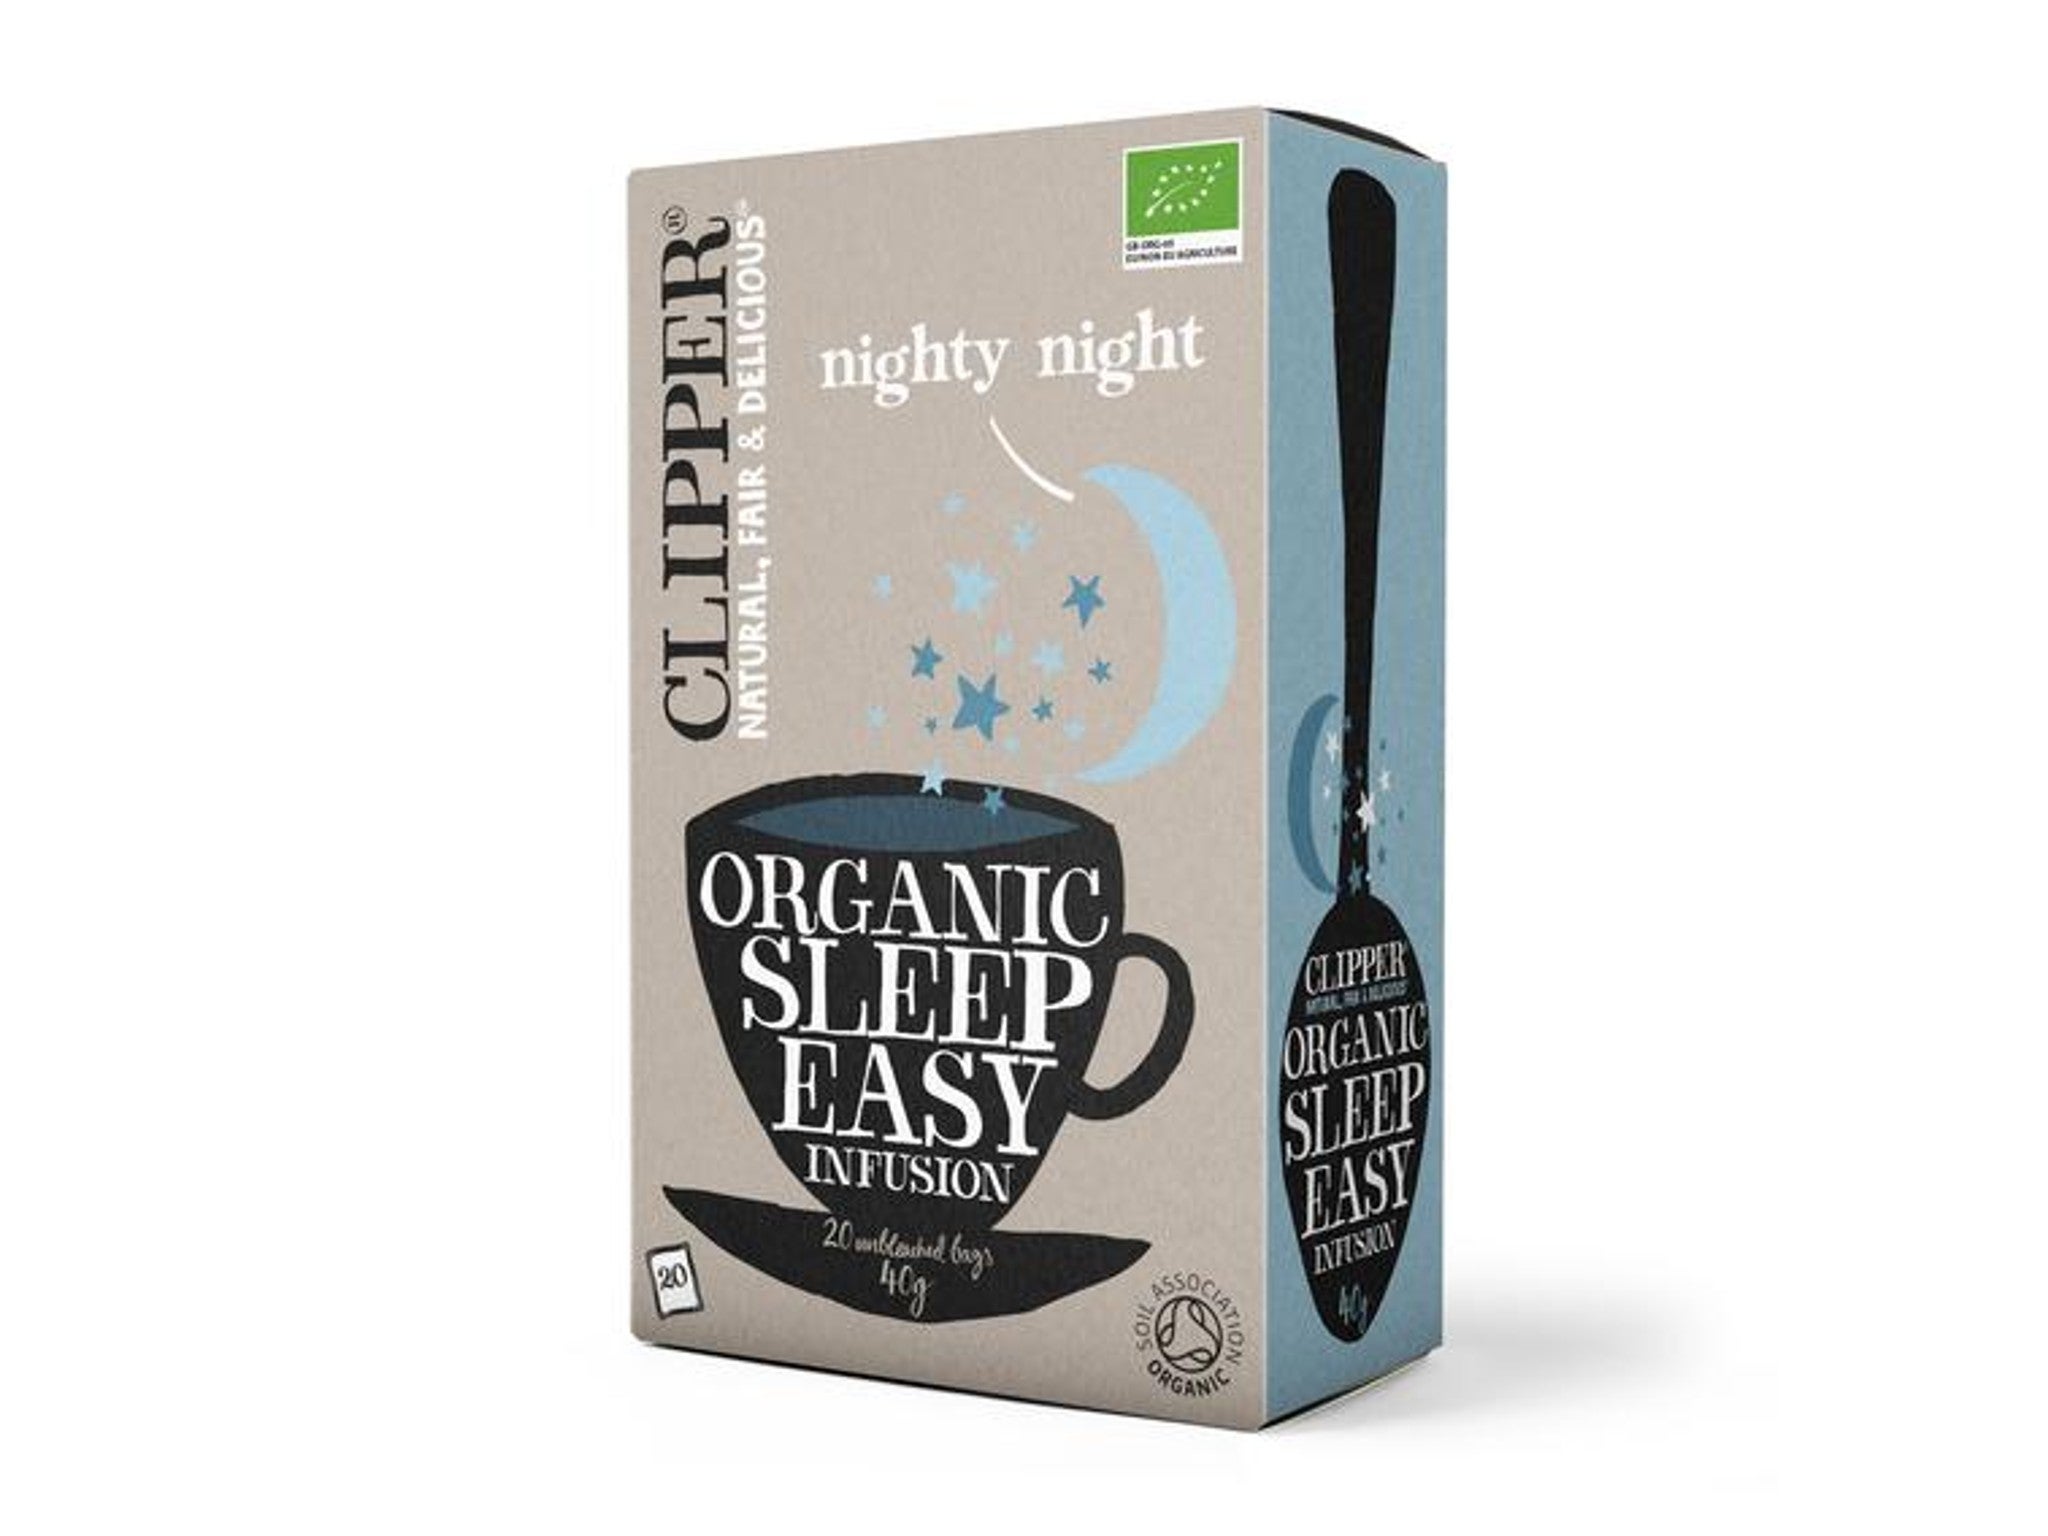 Clipper organic sleep easy infusion indybest.jpg